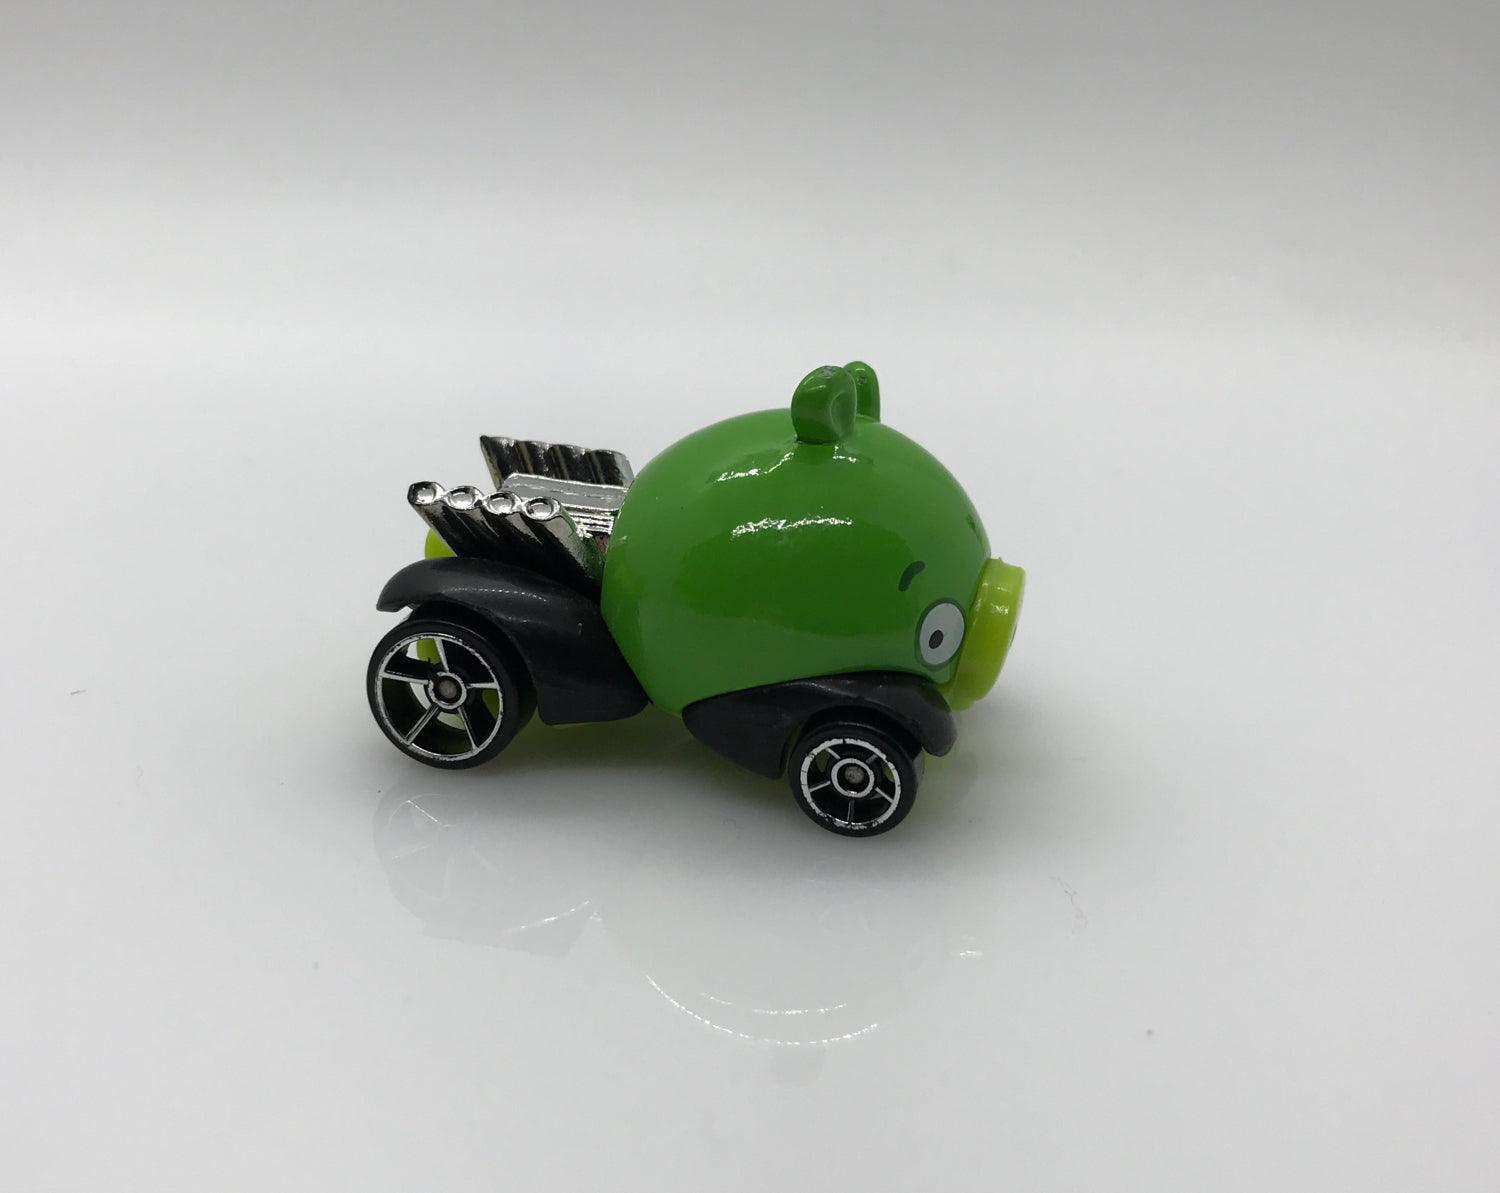 Hot Wheels Angry Birds Minion Green Pig (2012) - Lamoree’s Vintage